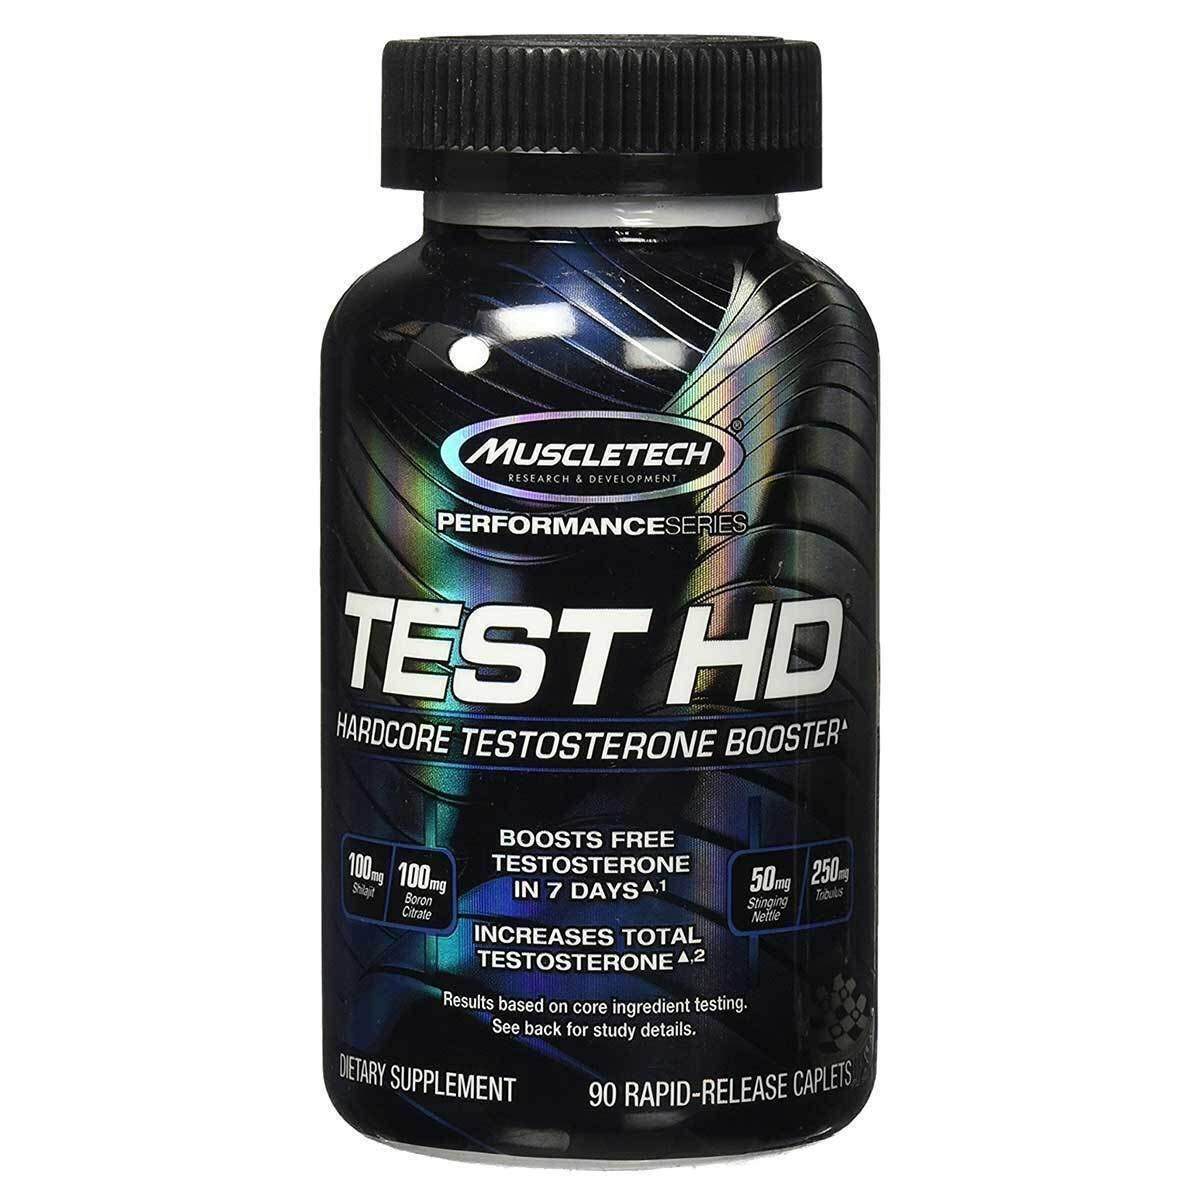 Muscletech Performance Series Test HD Hardcore Testosterone Booster (90 Rap...